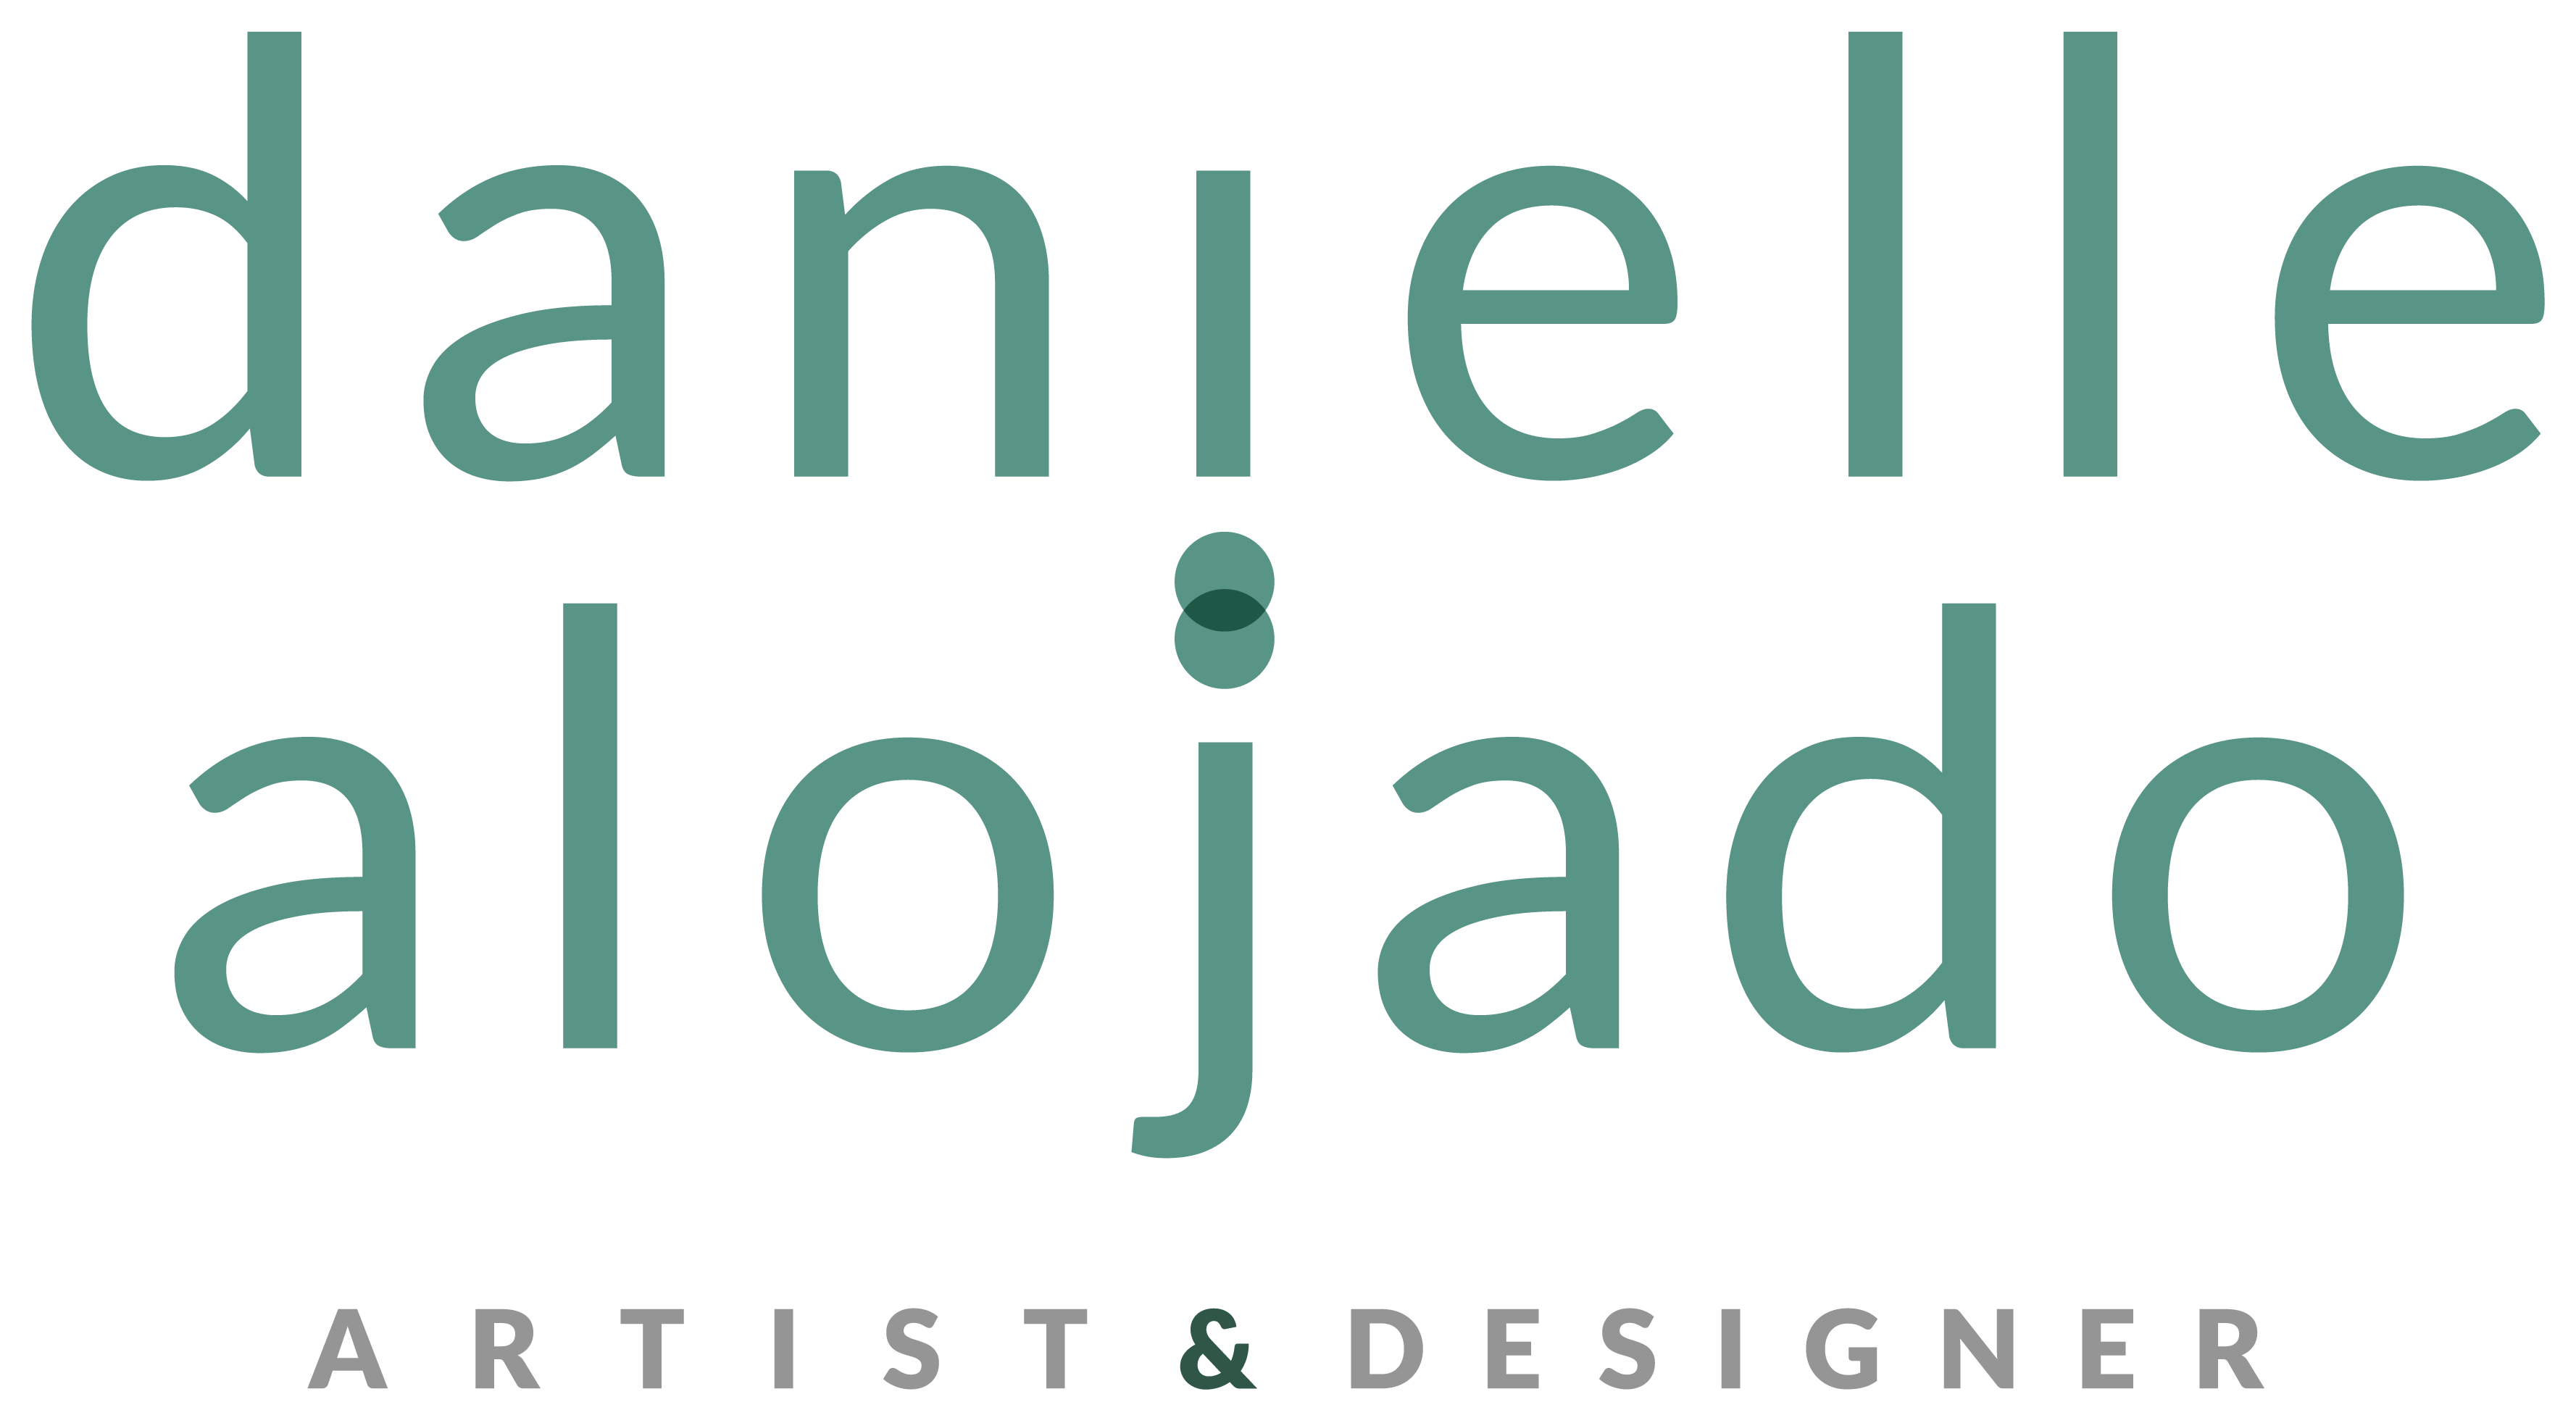 This is the logo, danielle alojado